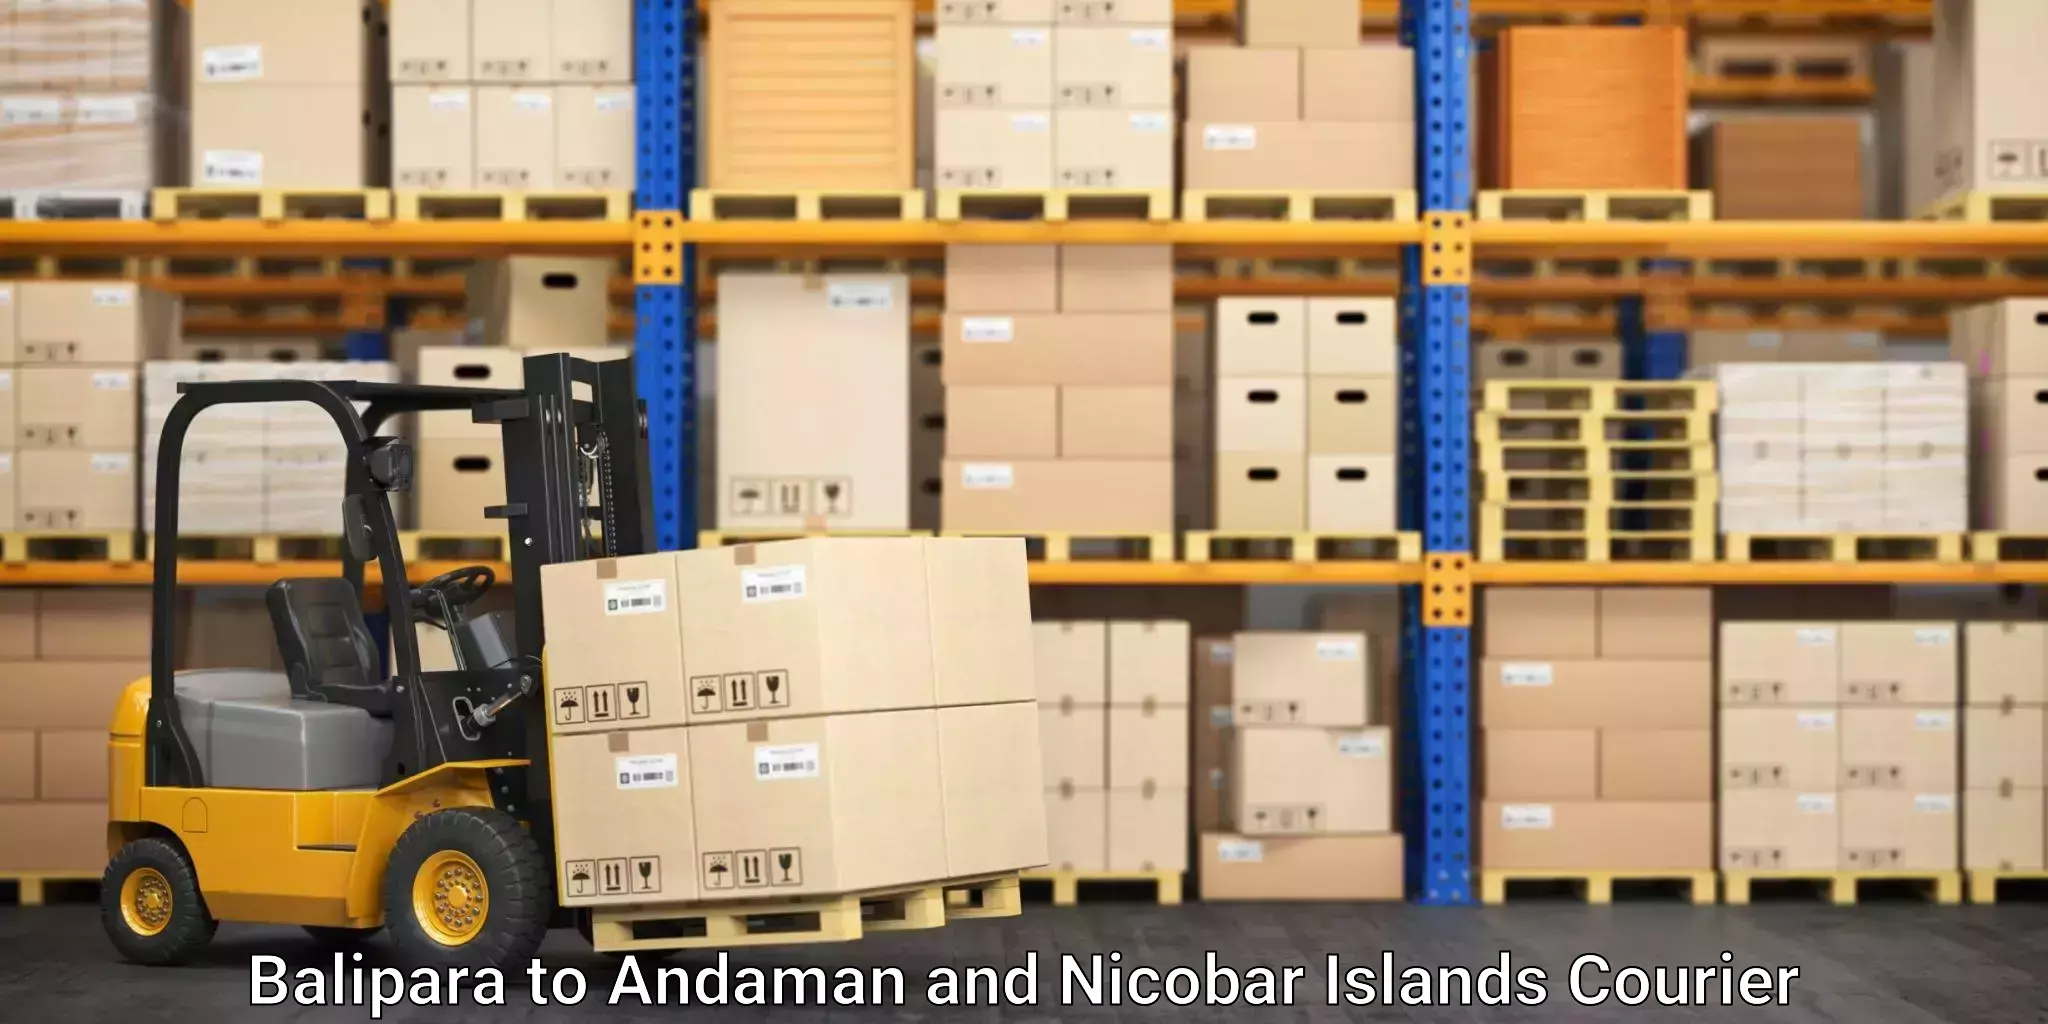 International courier networks Balipara to Andaman and Nicobar Islands